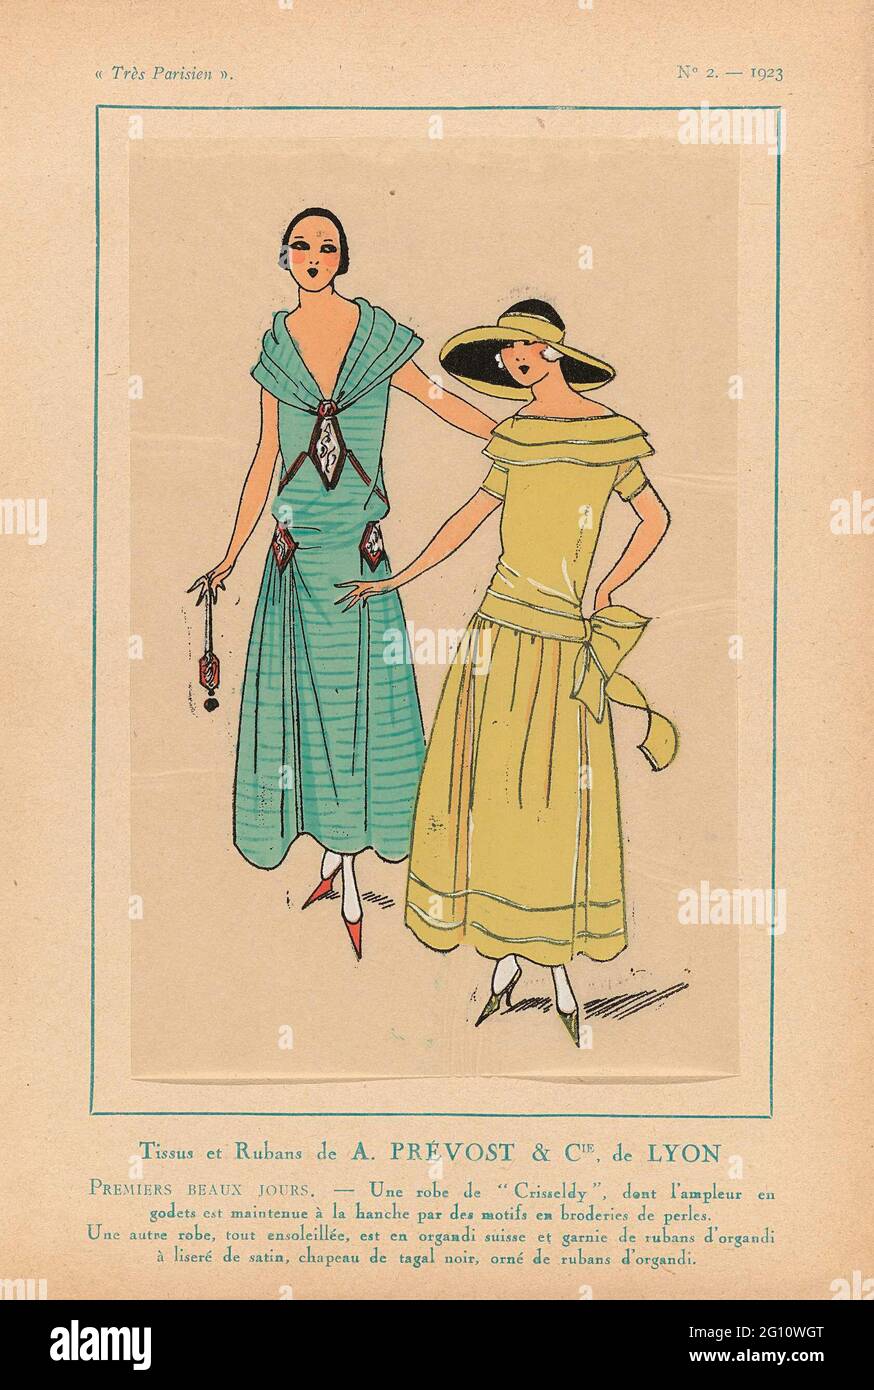 Très Parisien, 1923, No. 2: Tissus et Rubans the A. Prévost & Cie. The Lyon  .... fabrics and ribbons of A. Prévost & Cie from Lyon. A dress by  'Crisseldy', where the '